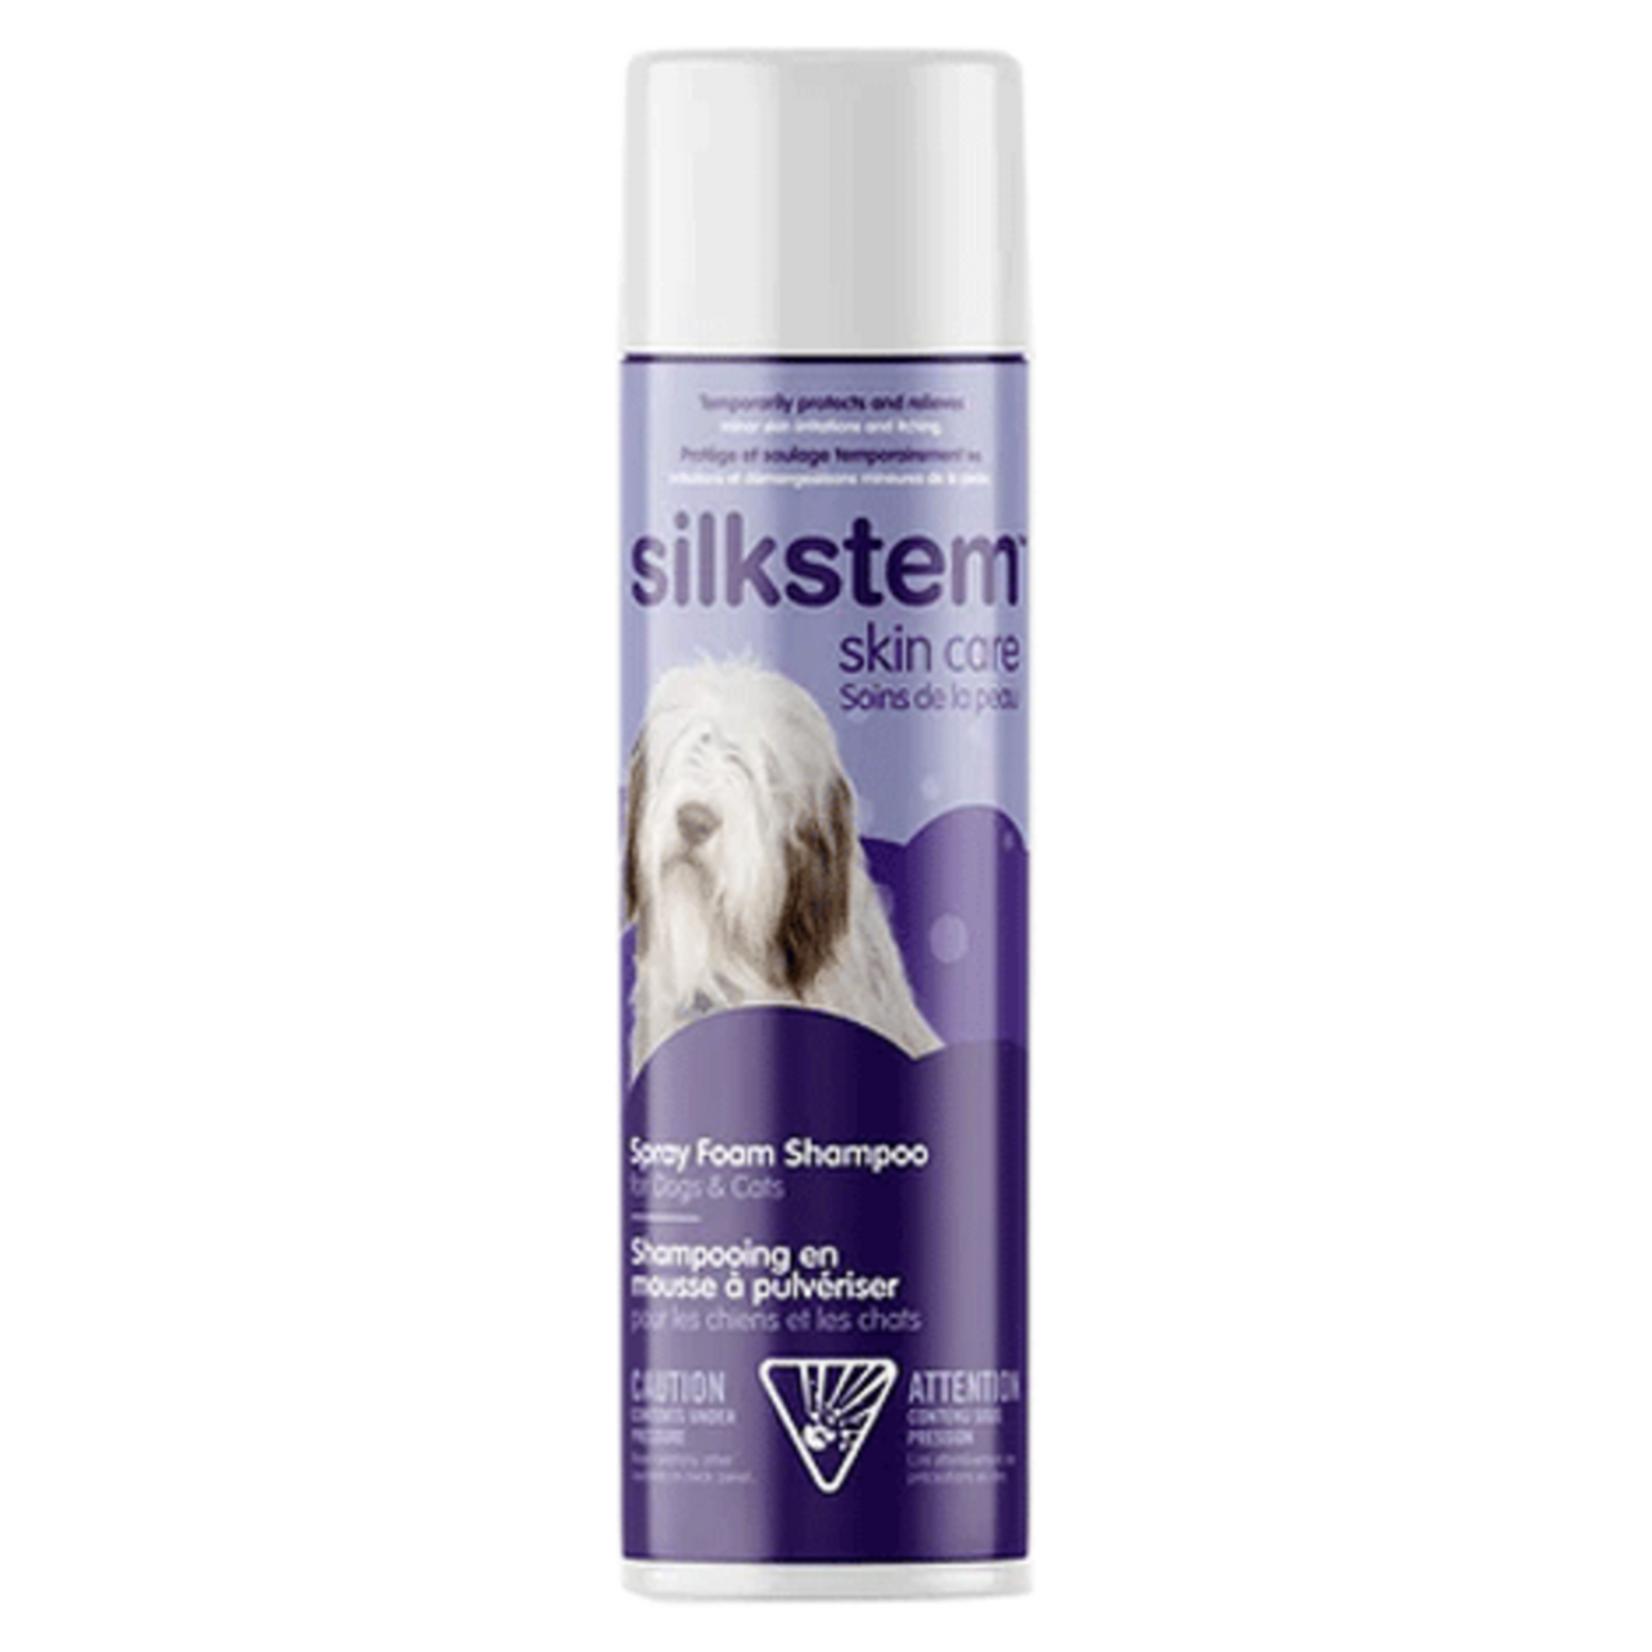 Silkstem Spray Foam Shampoo 283g